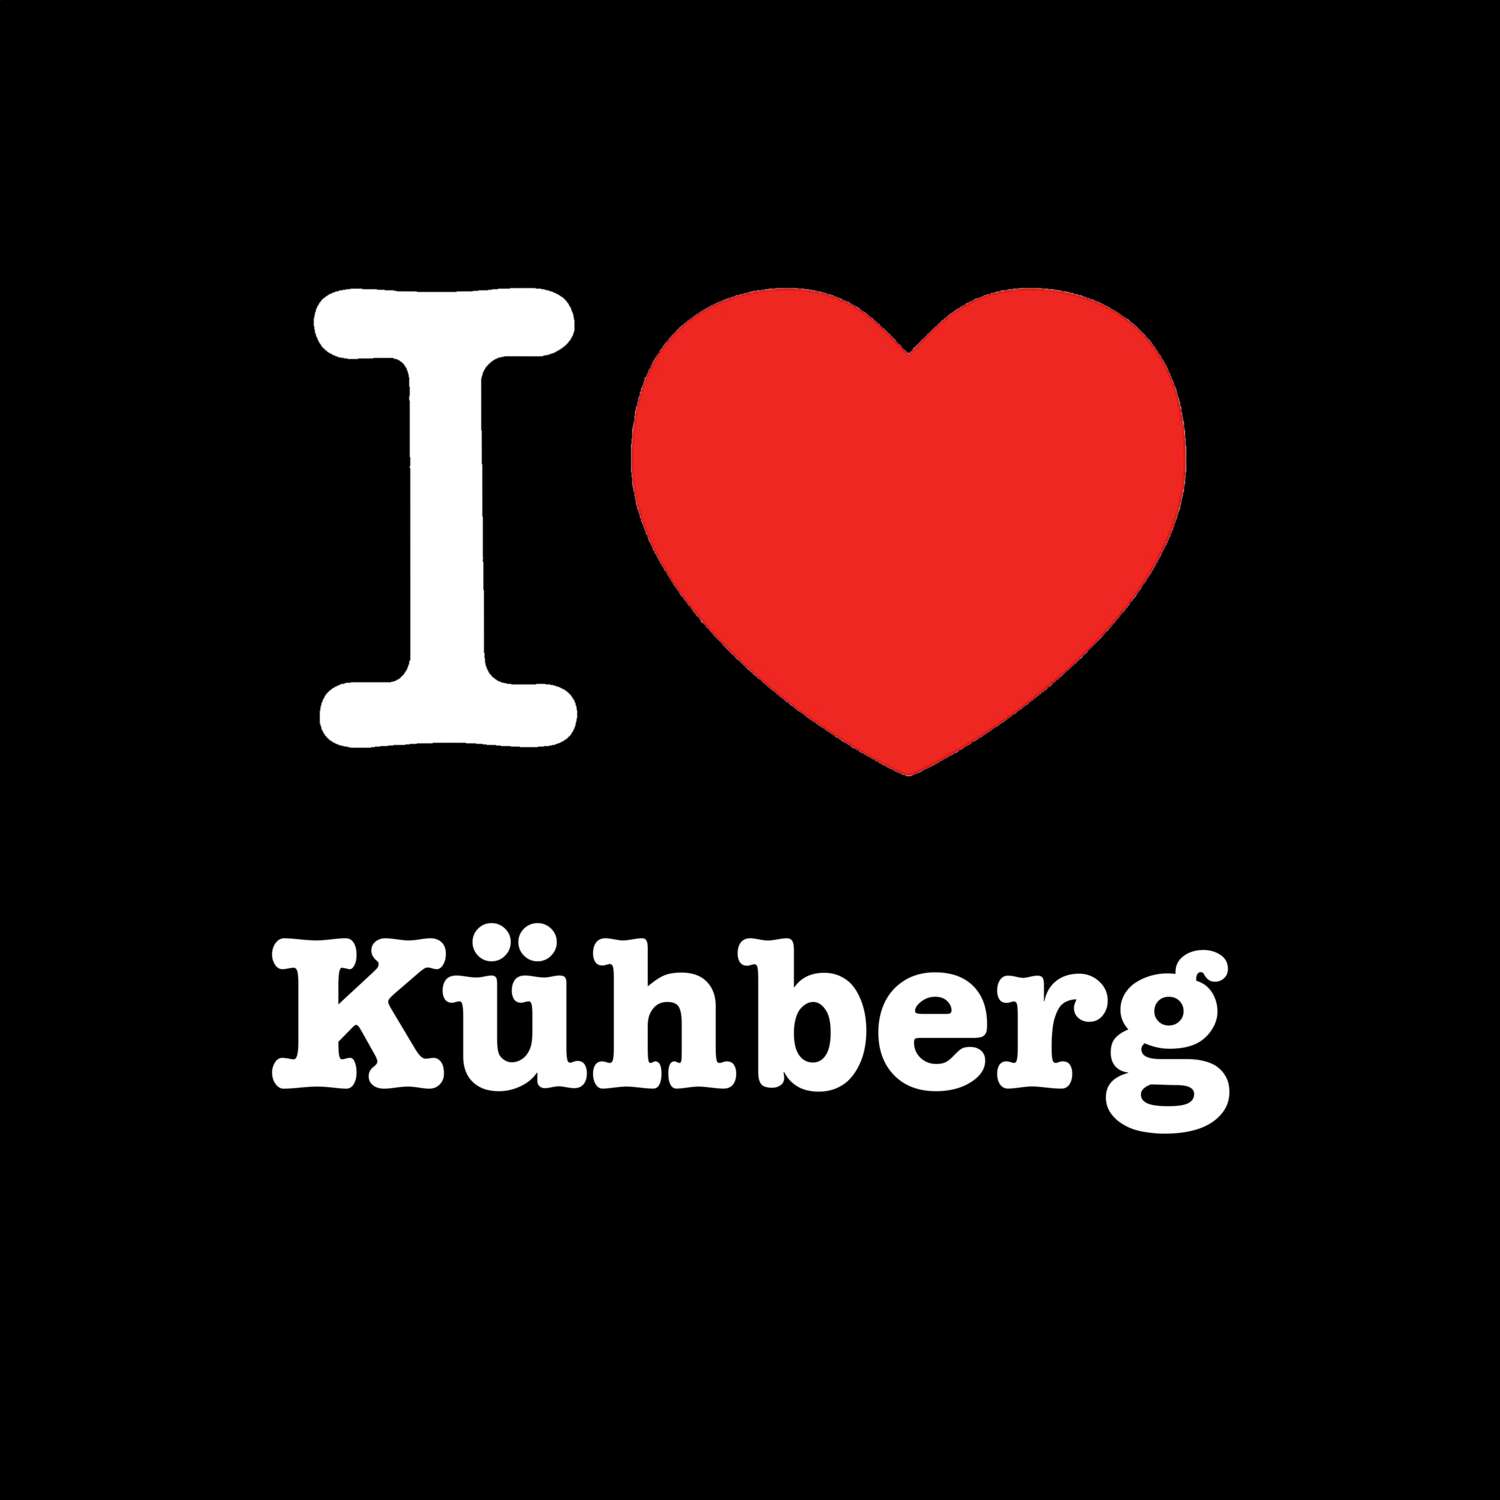 Kühberg T-Shirt »I love«